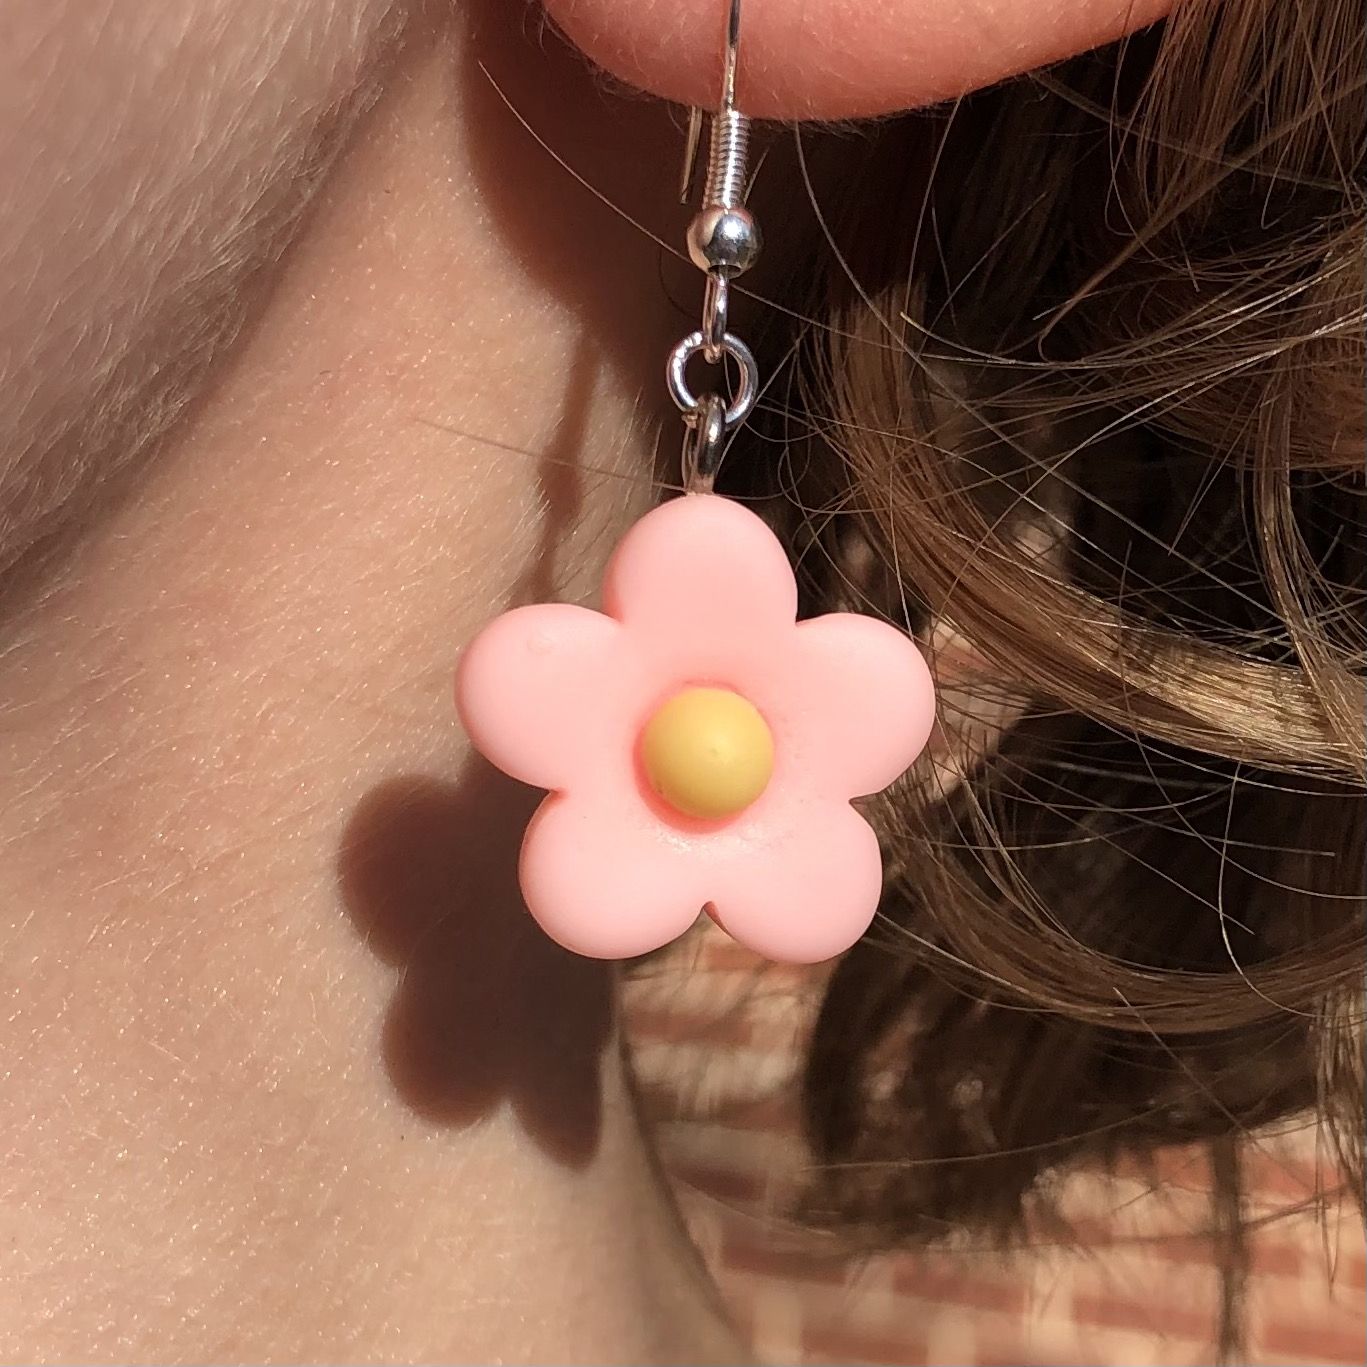 Flower earrings sparkle like your eyes in the sun